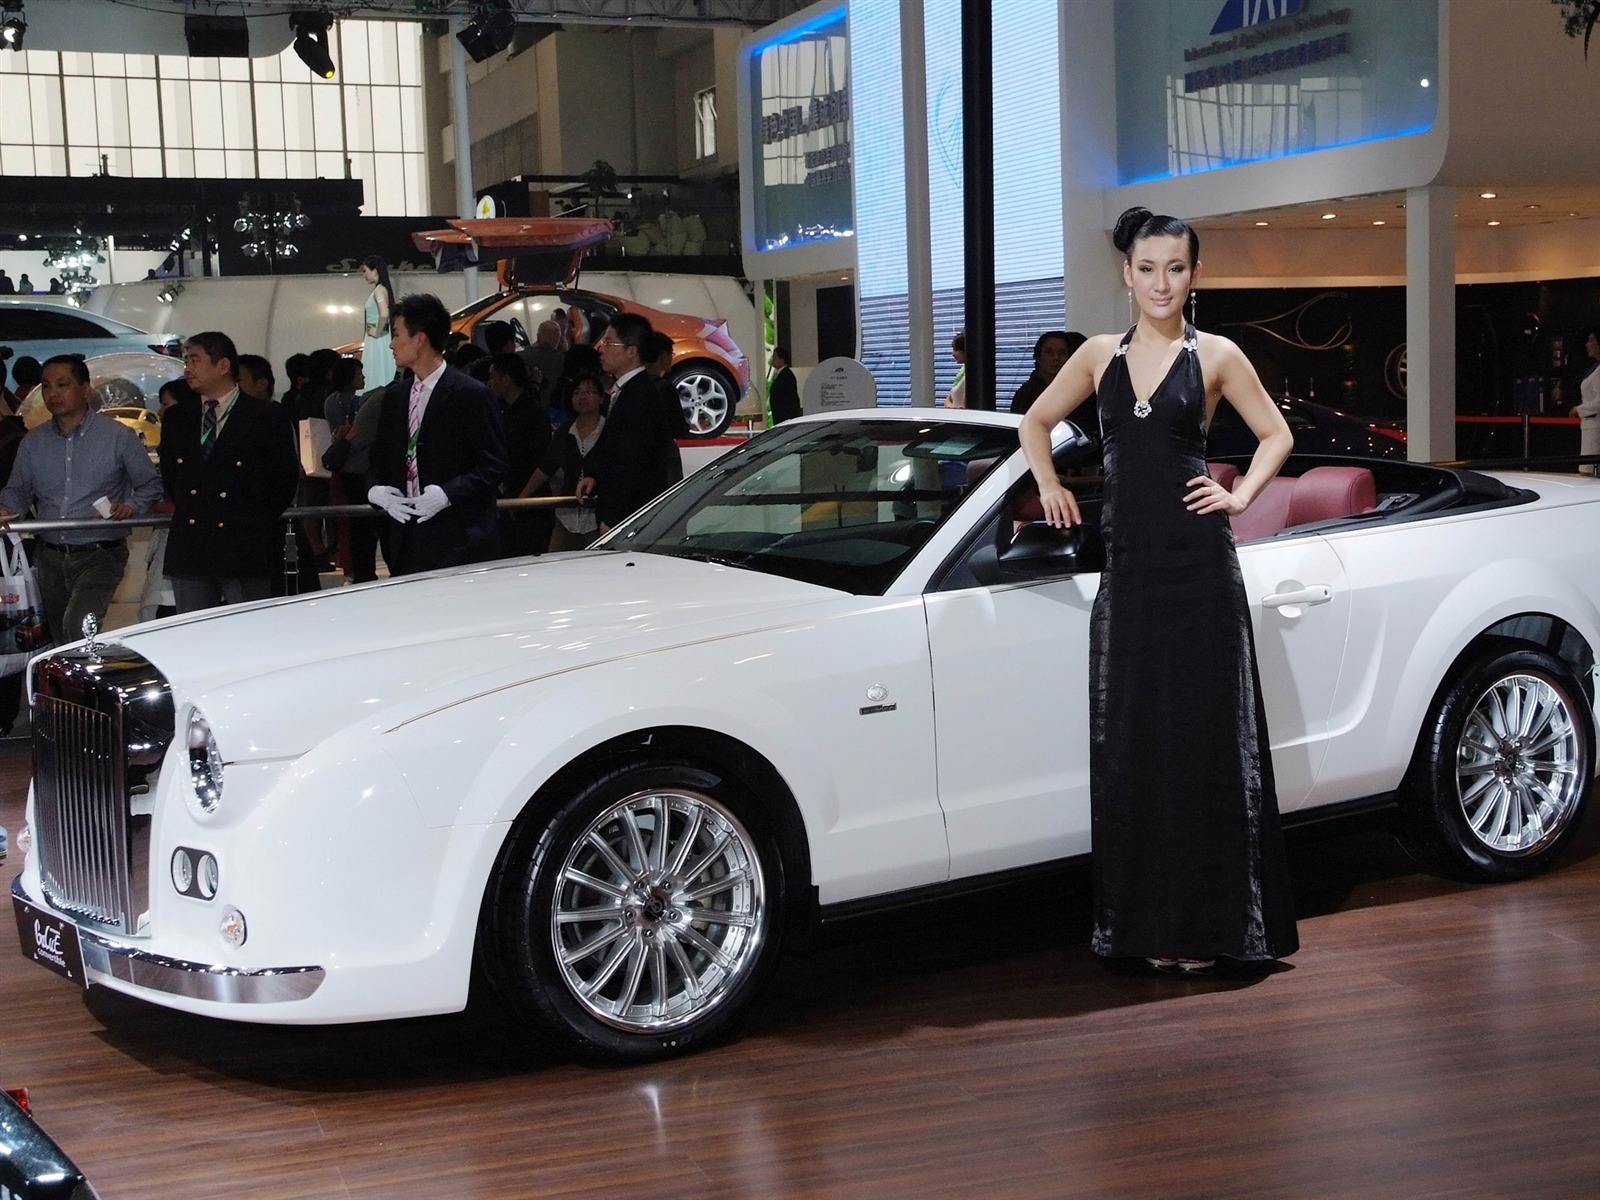 2010 Salón Internacional del Automóvil de Beijing Heung Che belleza (obras barras de refuerzo) #12 - 1600x1200